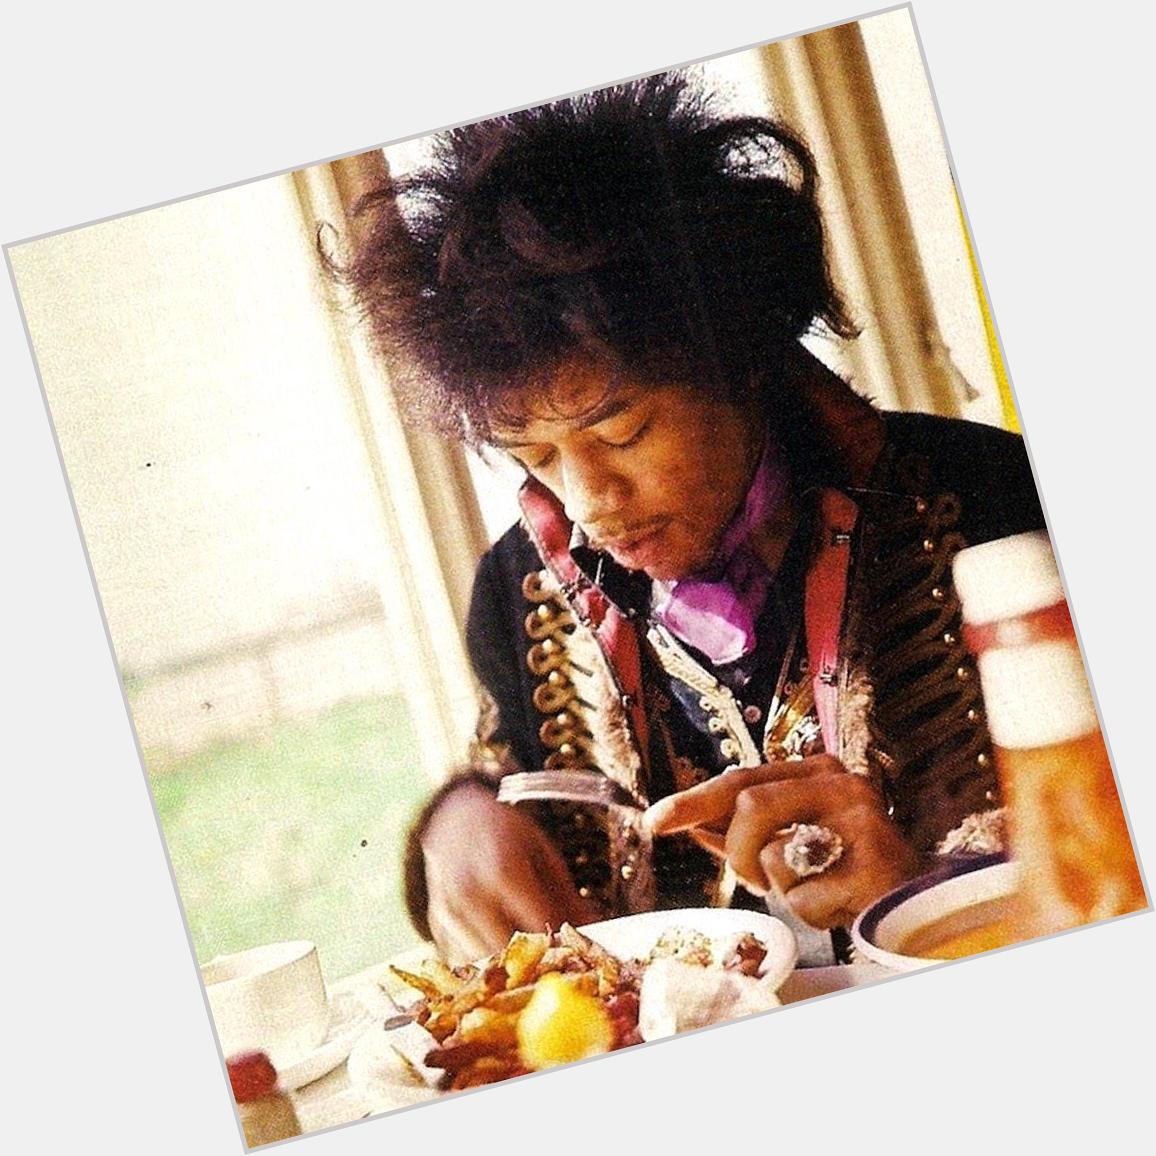 THANK YOU Jimi Hendrix
& Happy Birthday! 